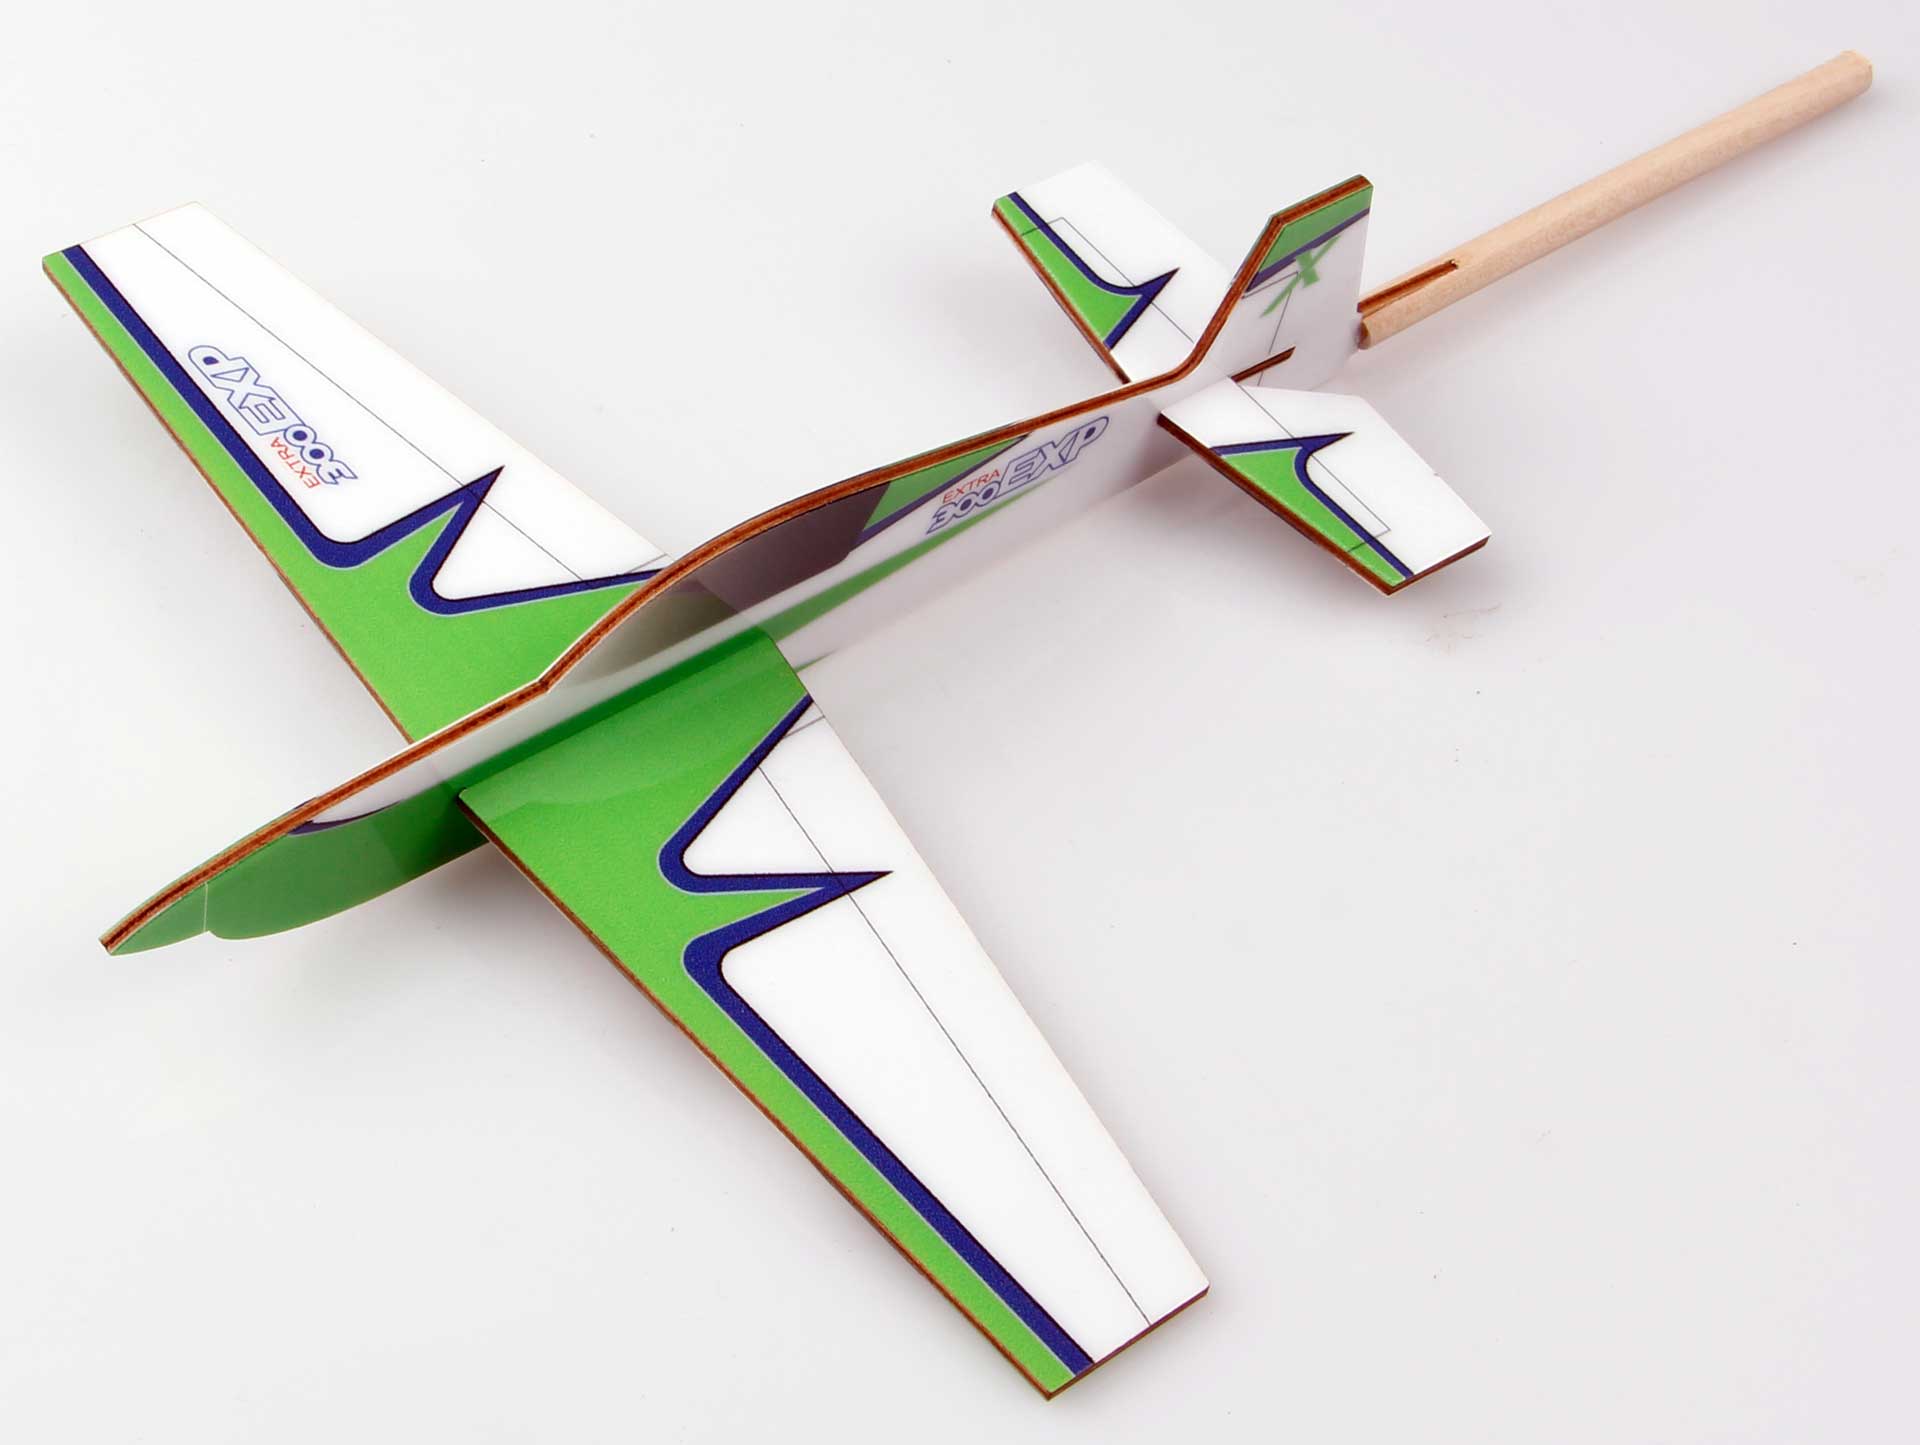 EXTREMEFLIGHT-RC Extra 300 grün/weiss Stick Plane